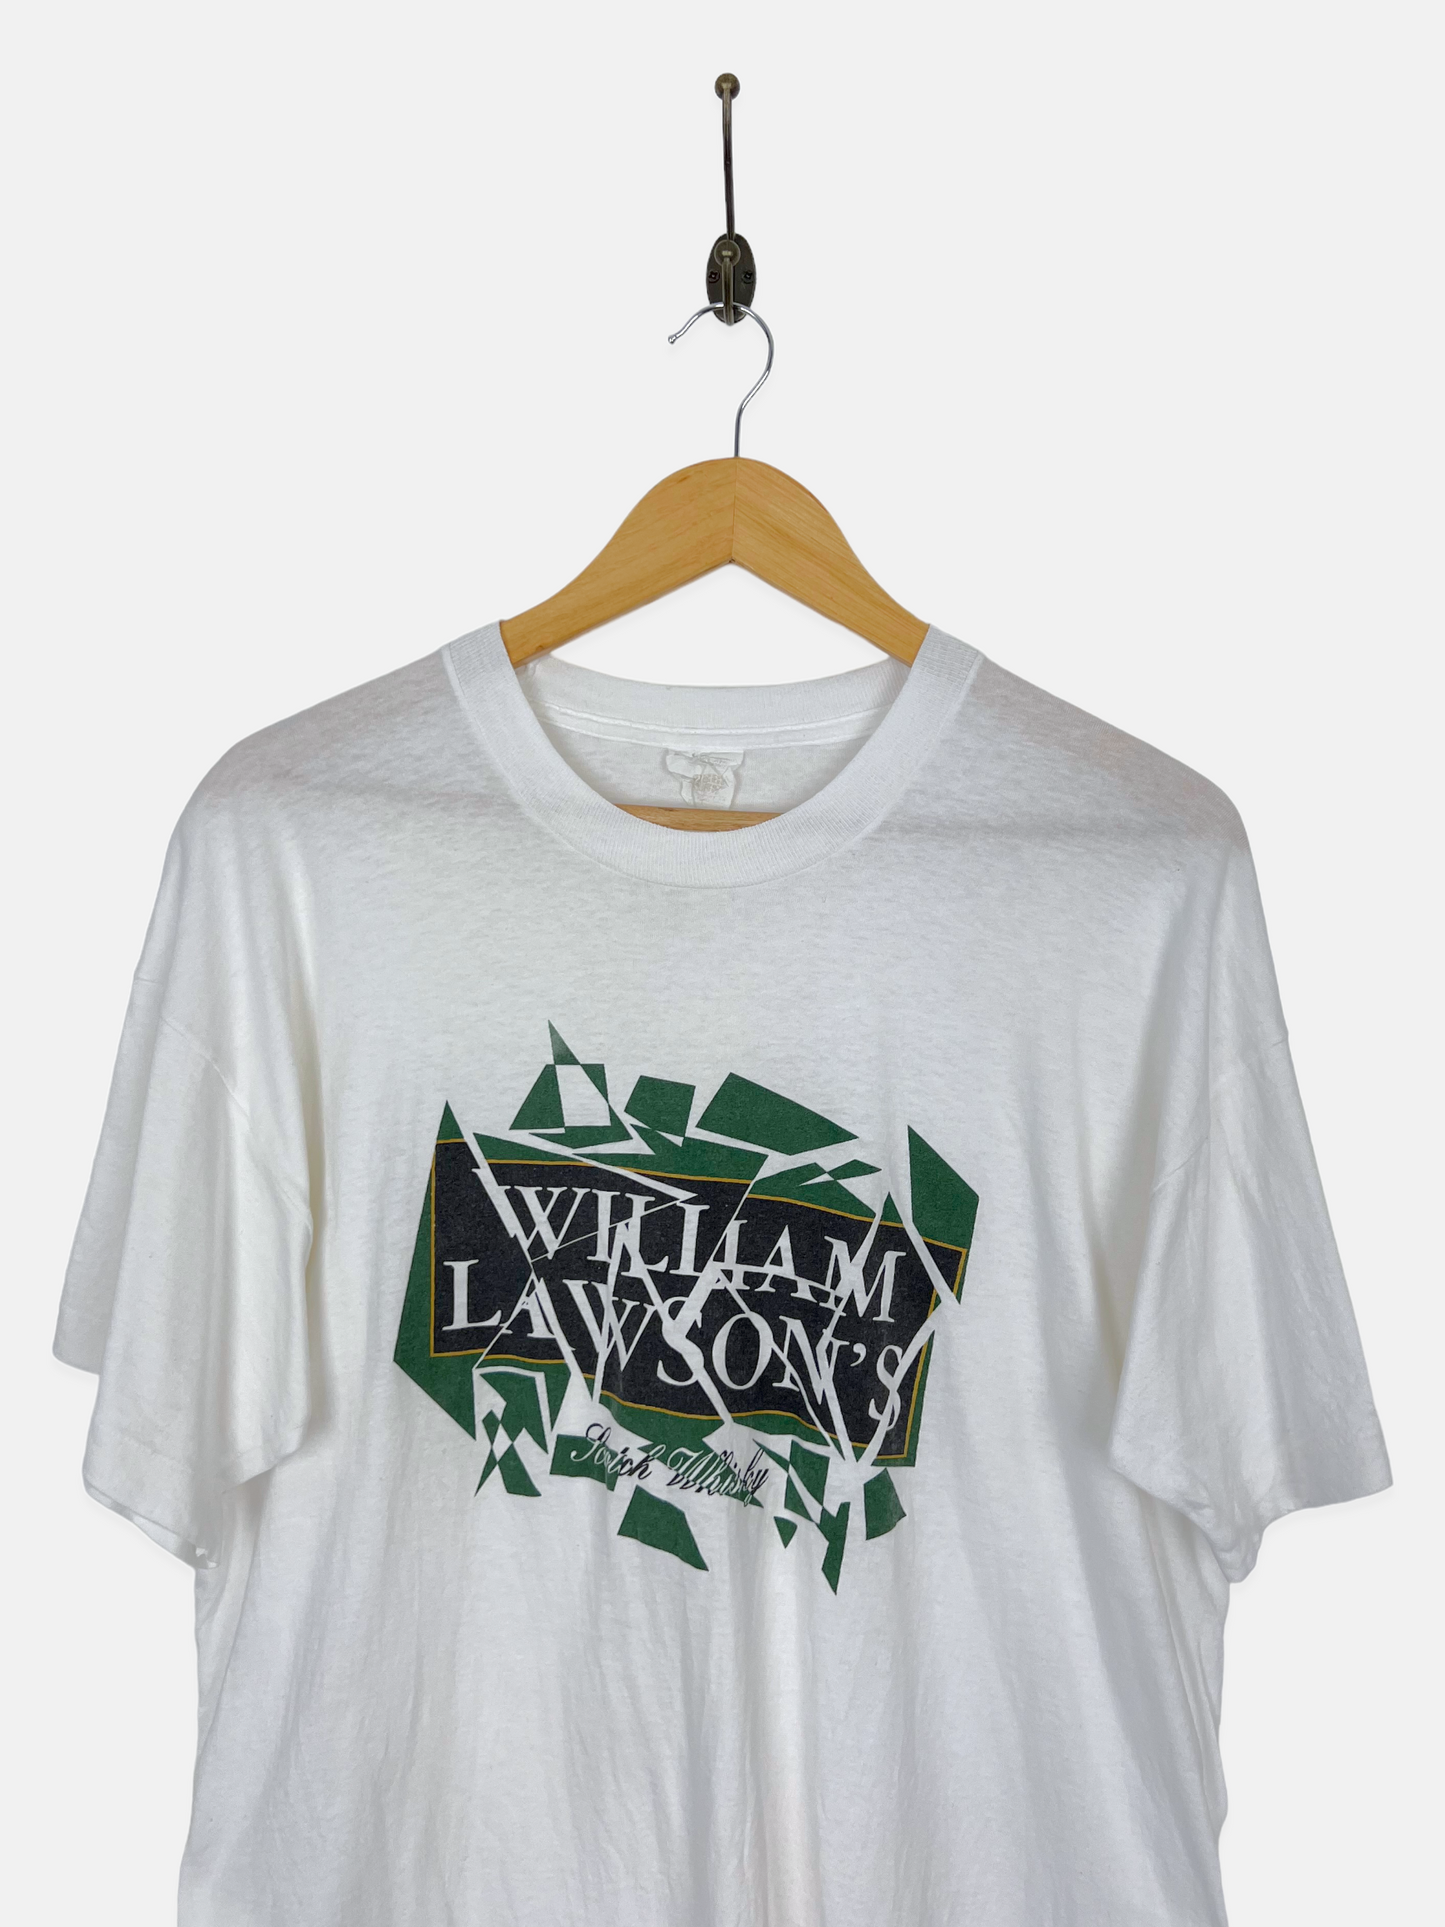 90's William Lawson's Scotch Whisky Vintage T-Shirt Size M